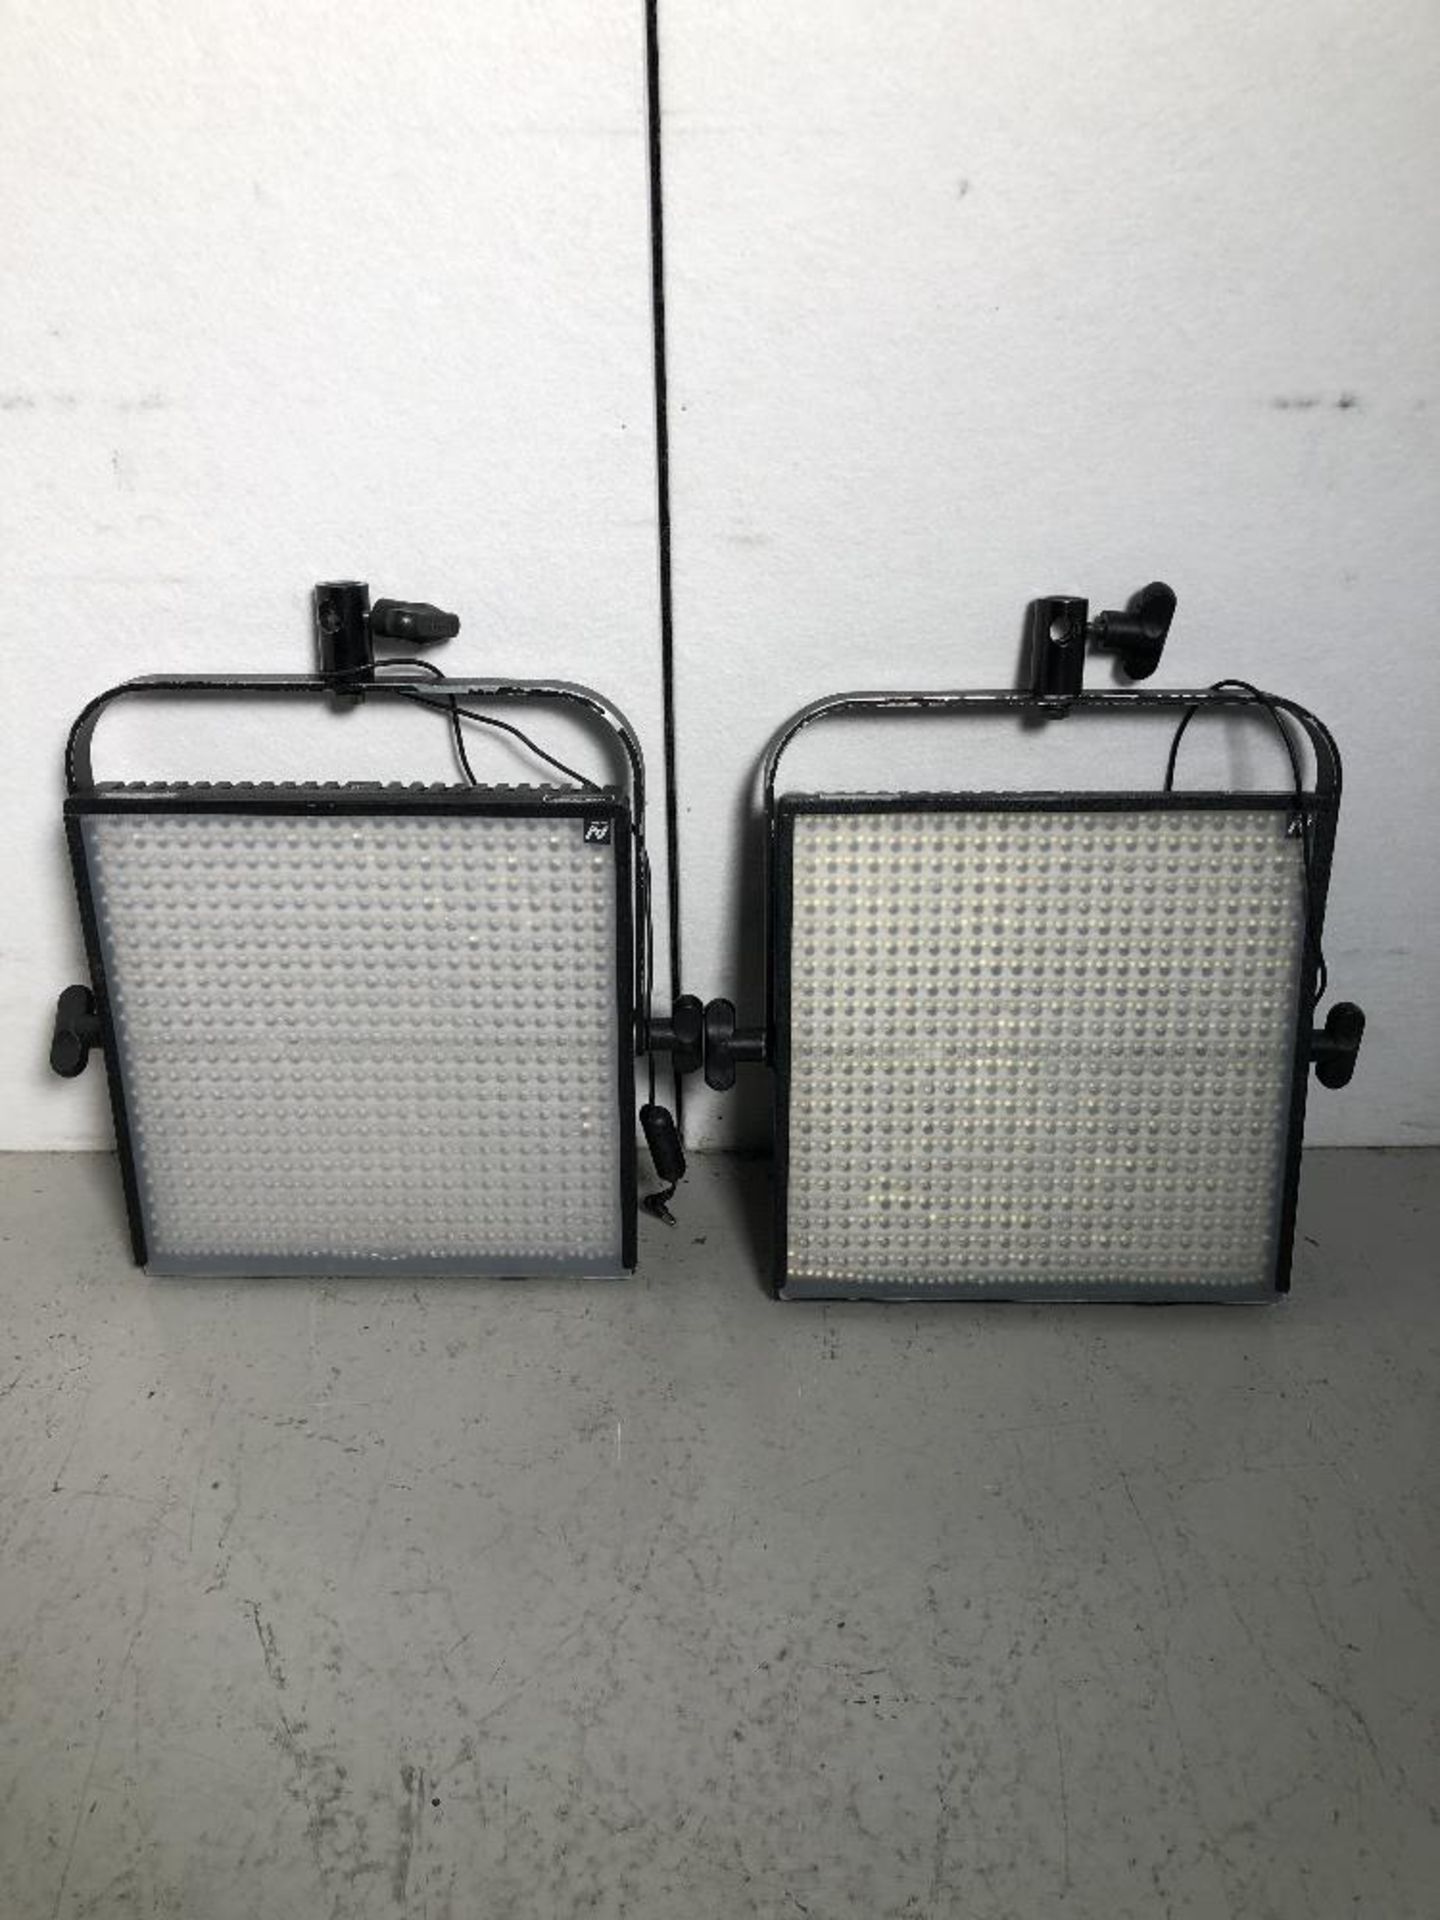 Litepanels 1X1 LED Panel Light kit - Image 3 of 7